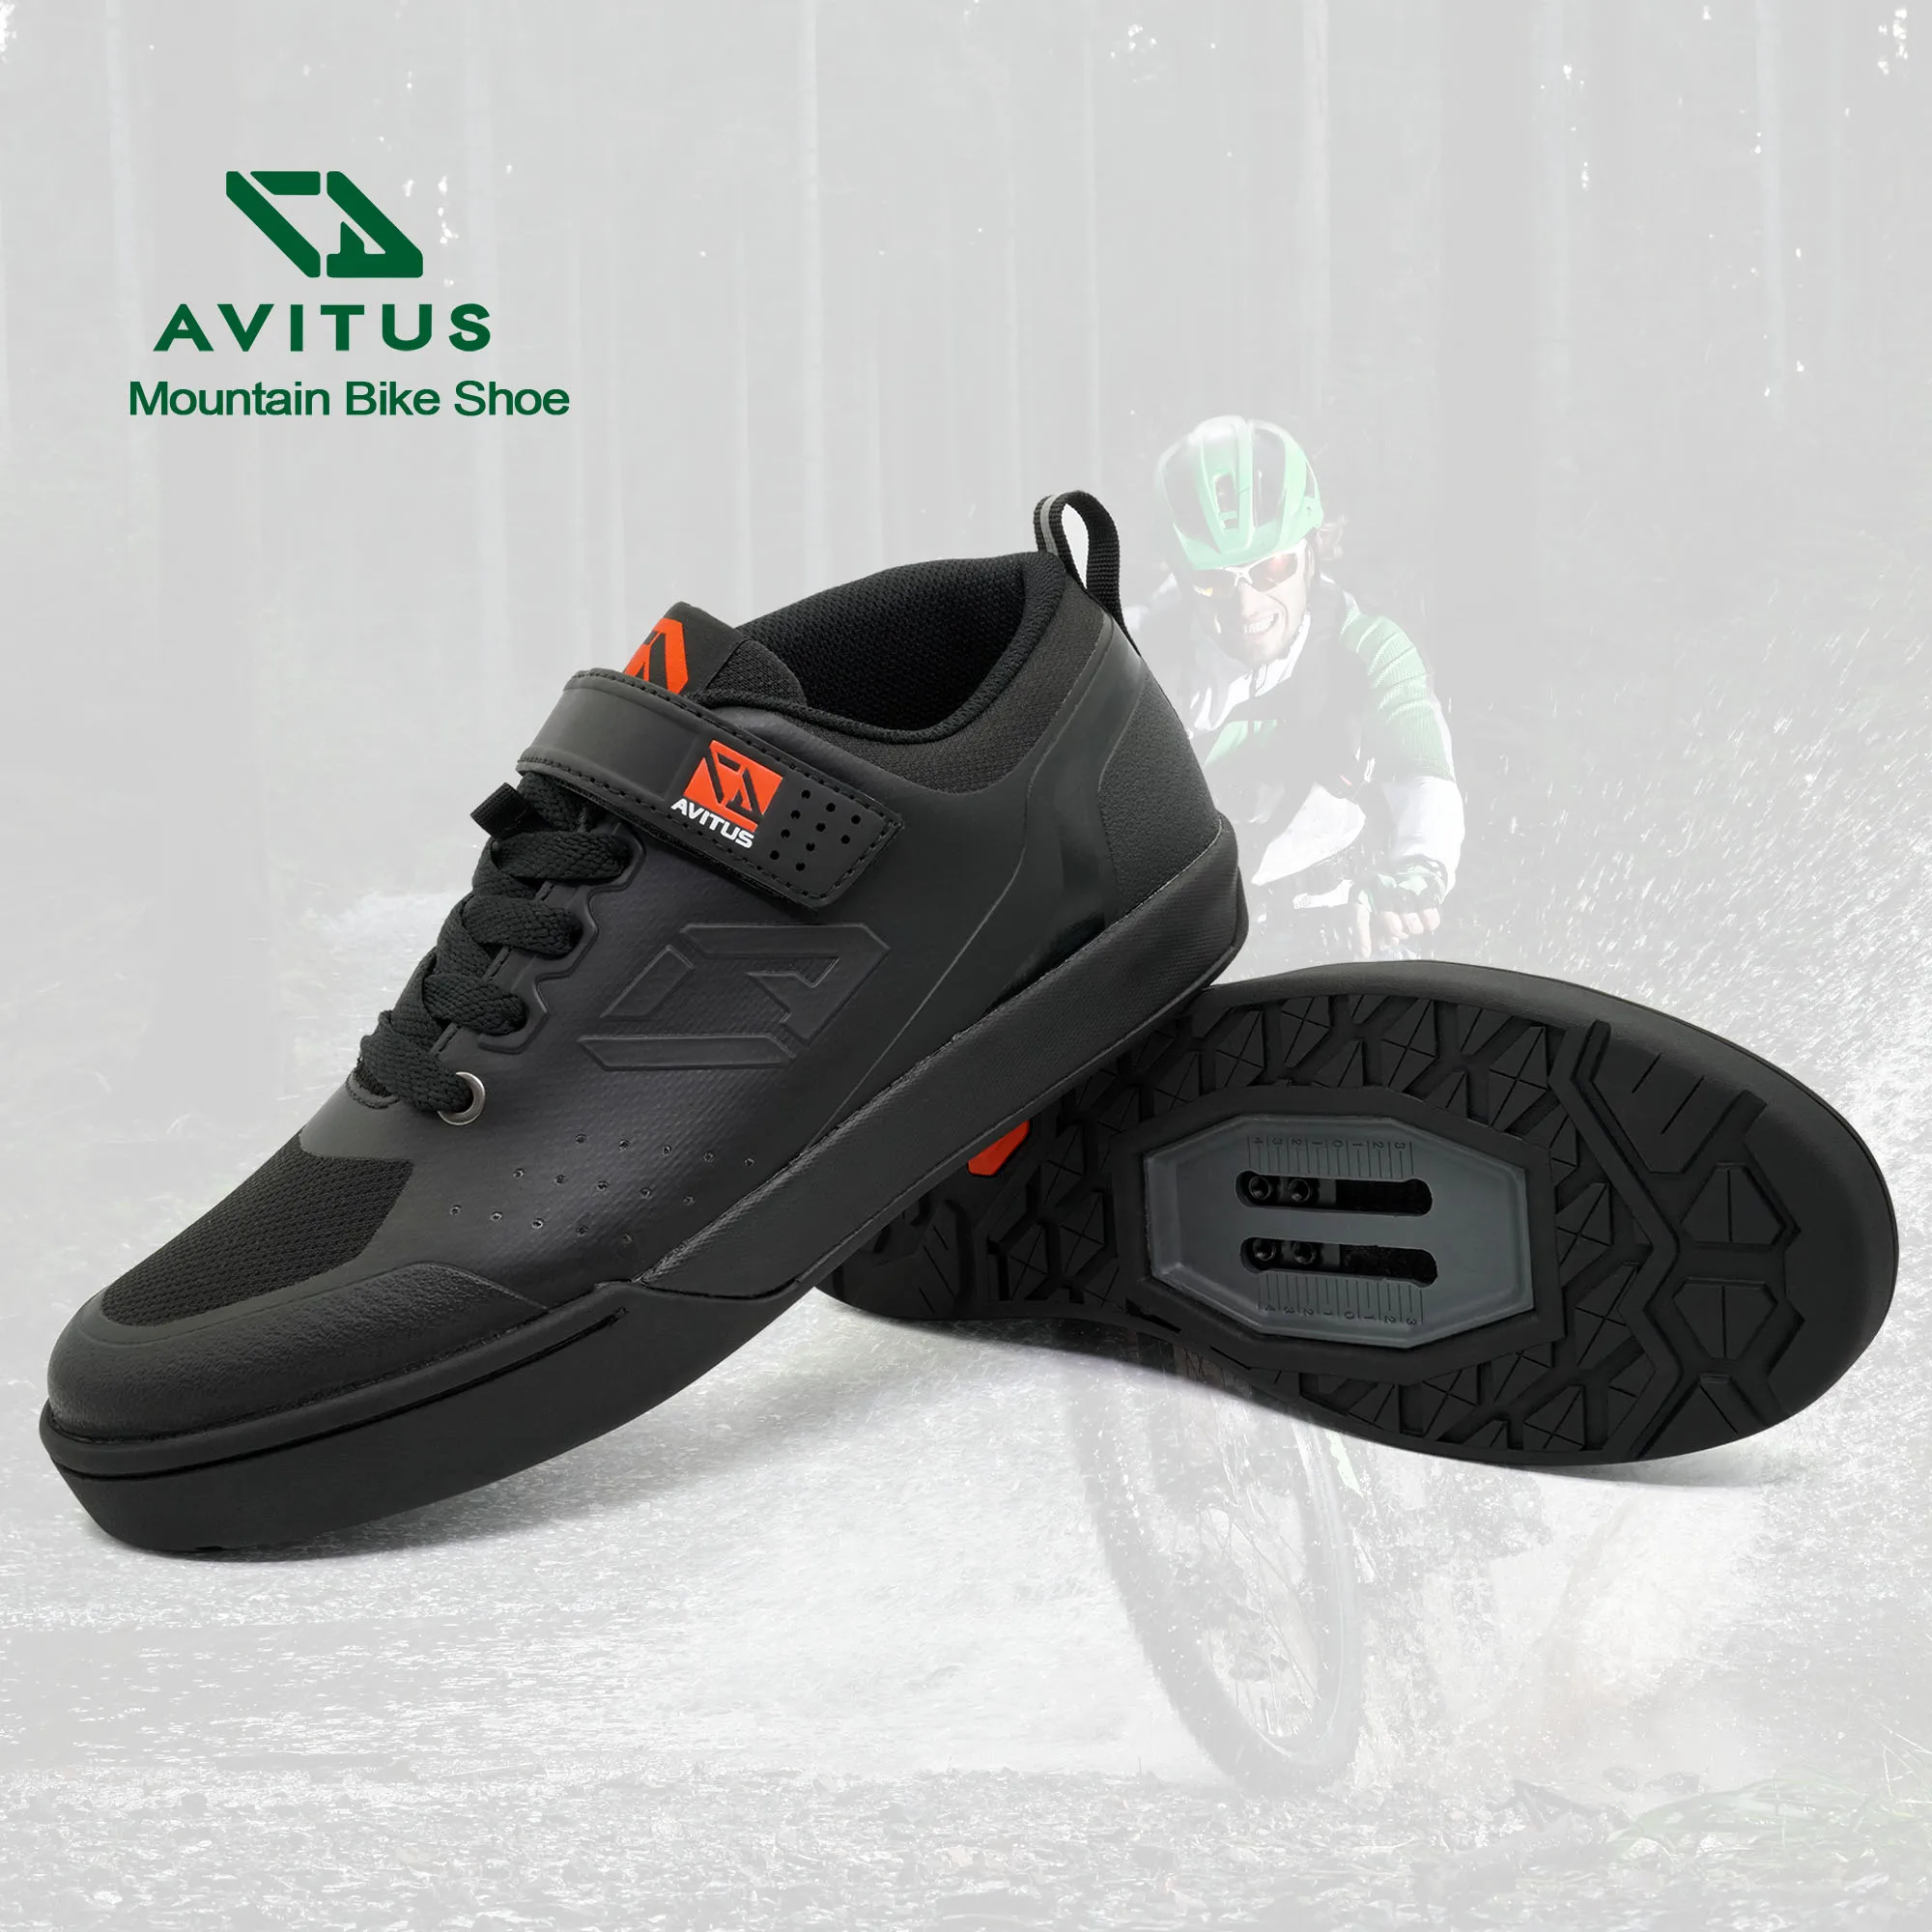 Clipless Enduro Mtb Shoes | Mtb Cycling Shoes | Mtb Avitus Shoes Downhill Shoes - 2-bolt - Aliexpress